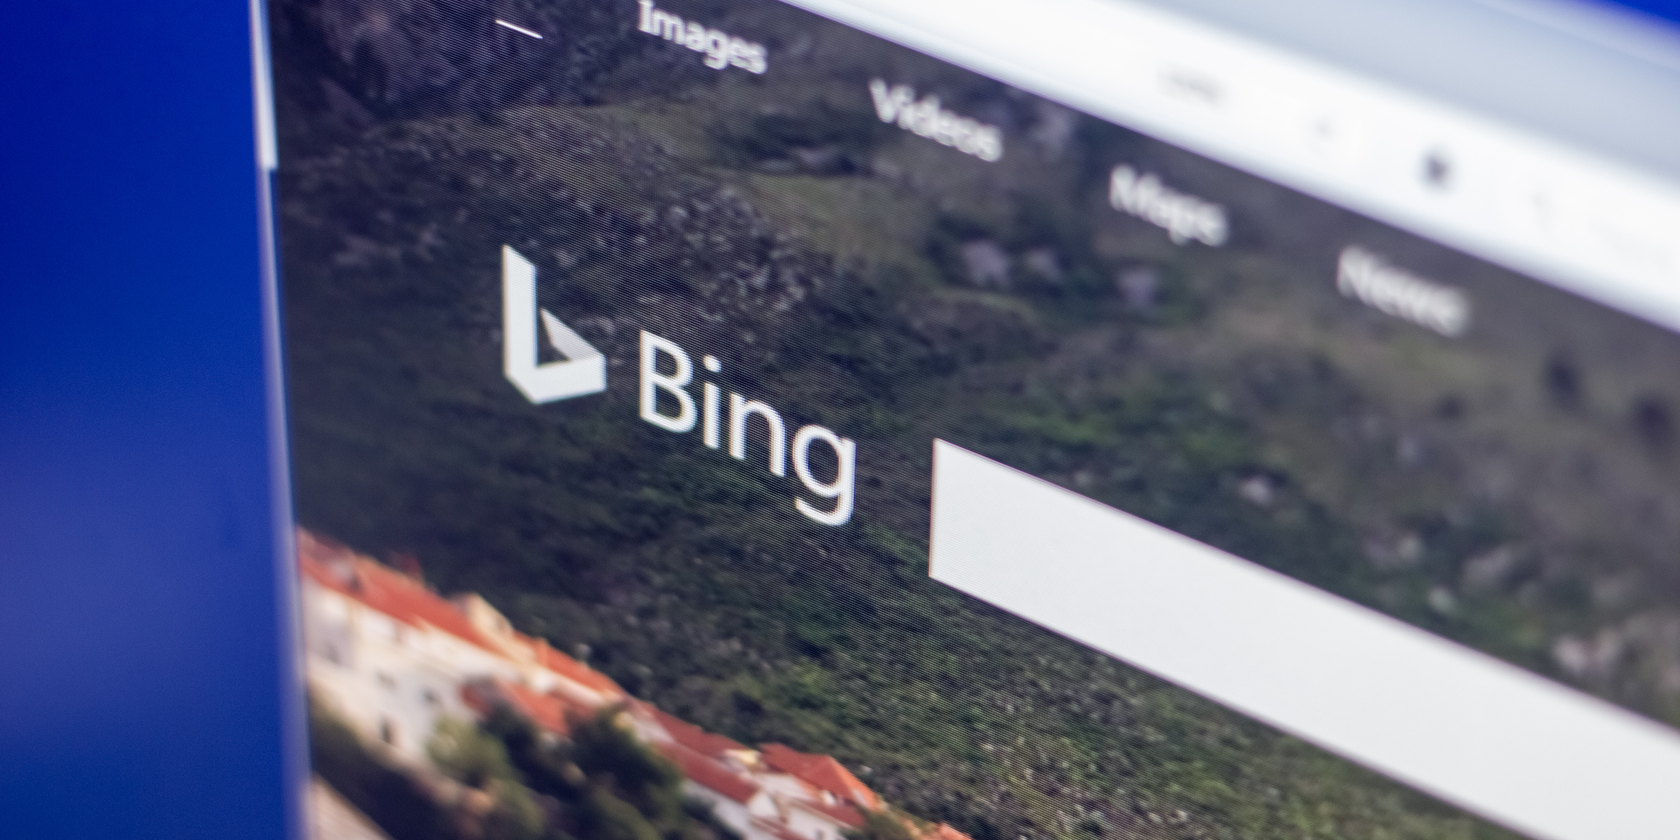 Microsoft Bing search engine